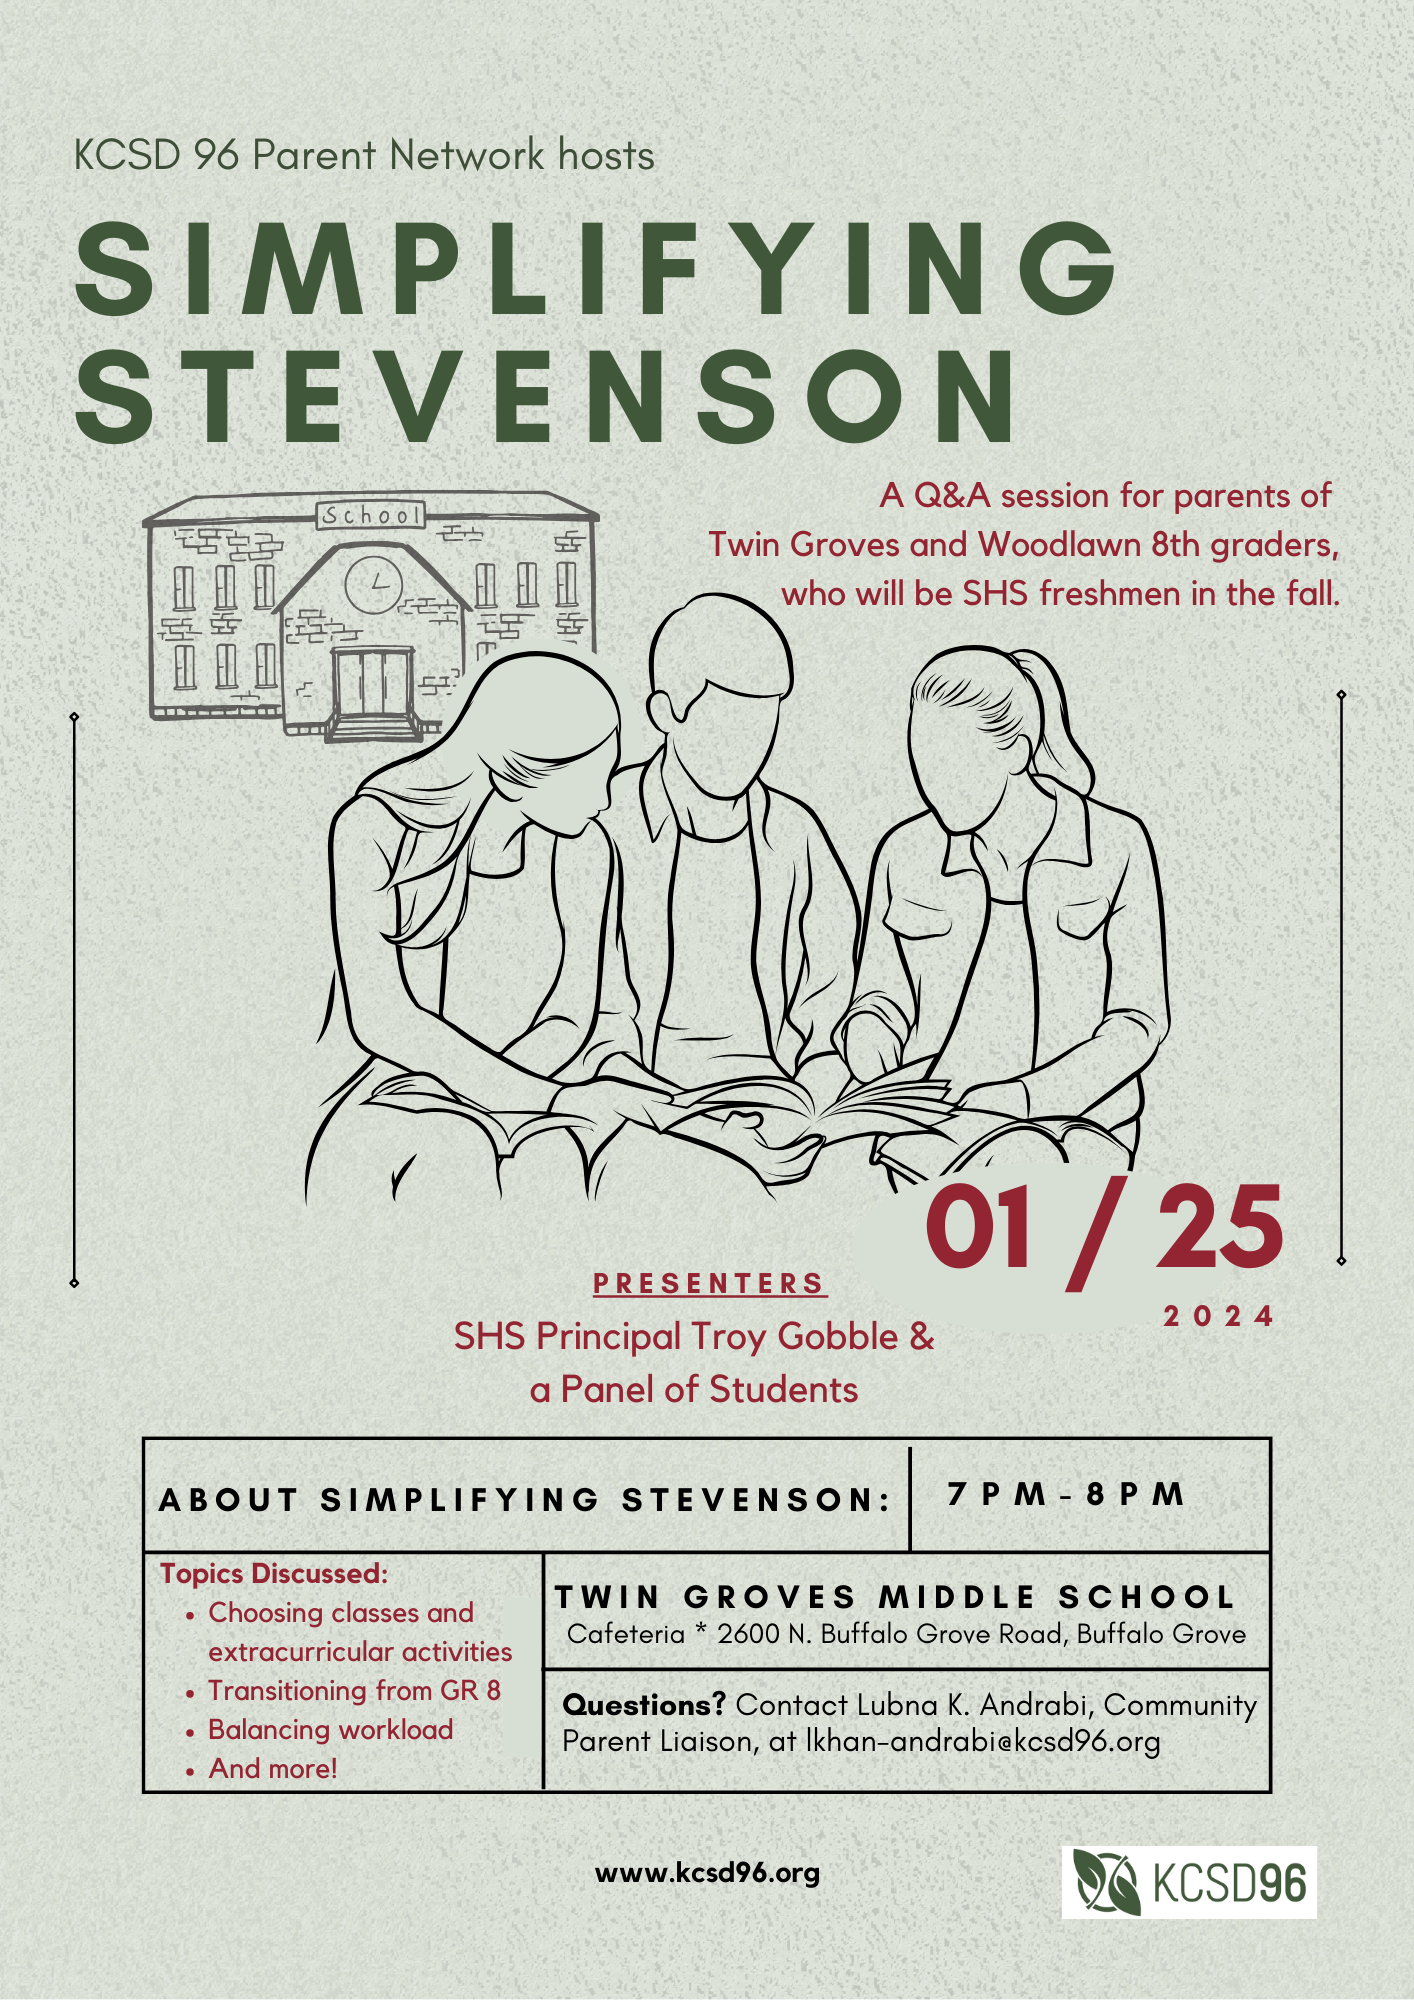 District 96 Co-hosts "Simplifying Stevenson" on January 25, 2024